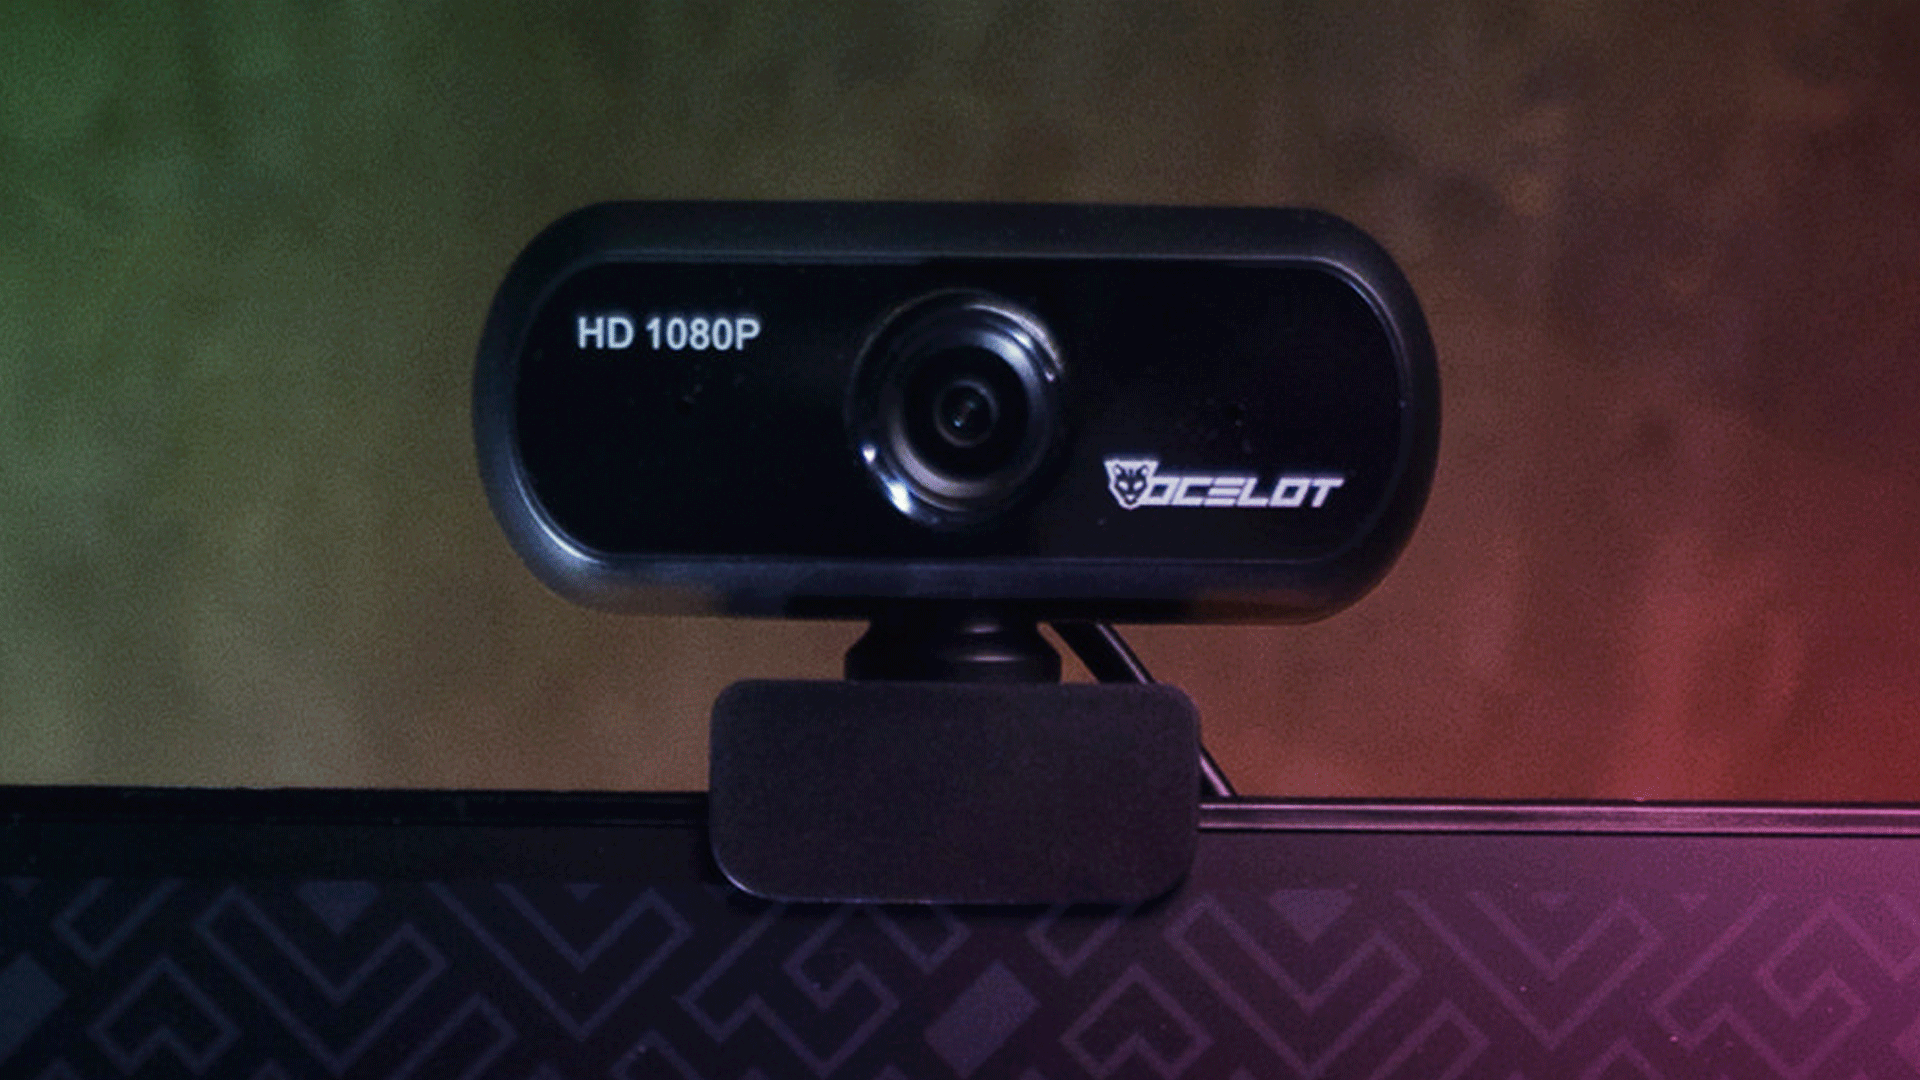 Webcam - OGW-01 - Ocelot Gaming - Comprar cámara web streaming